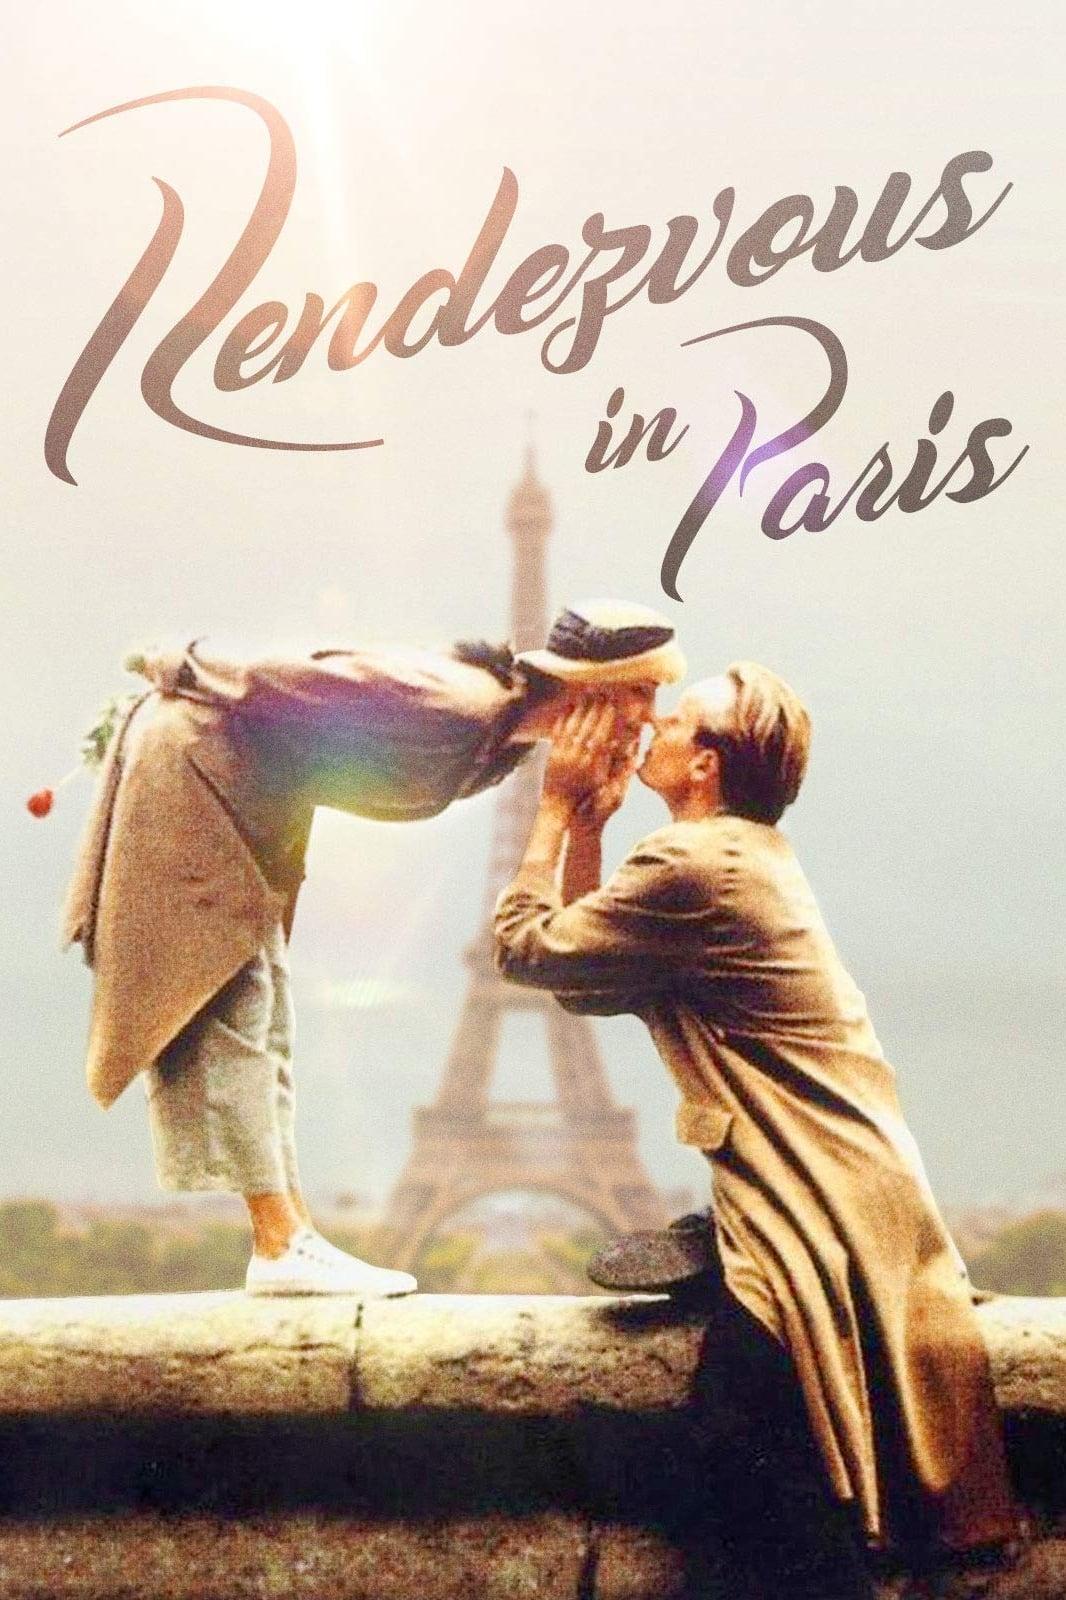 Rendezvous in Paris poster